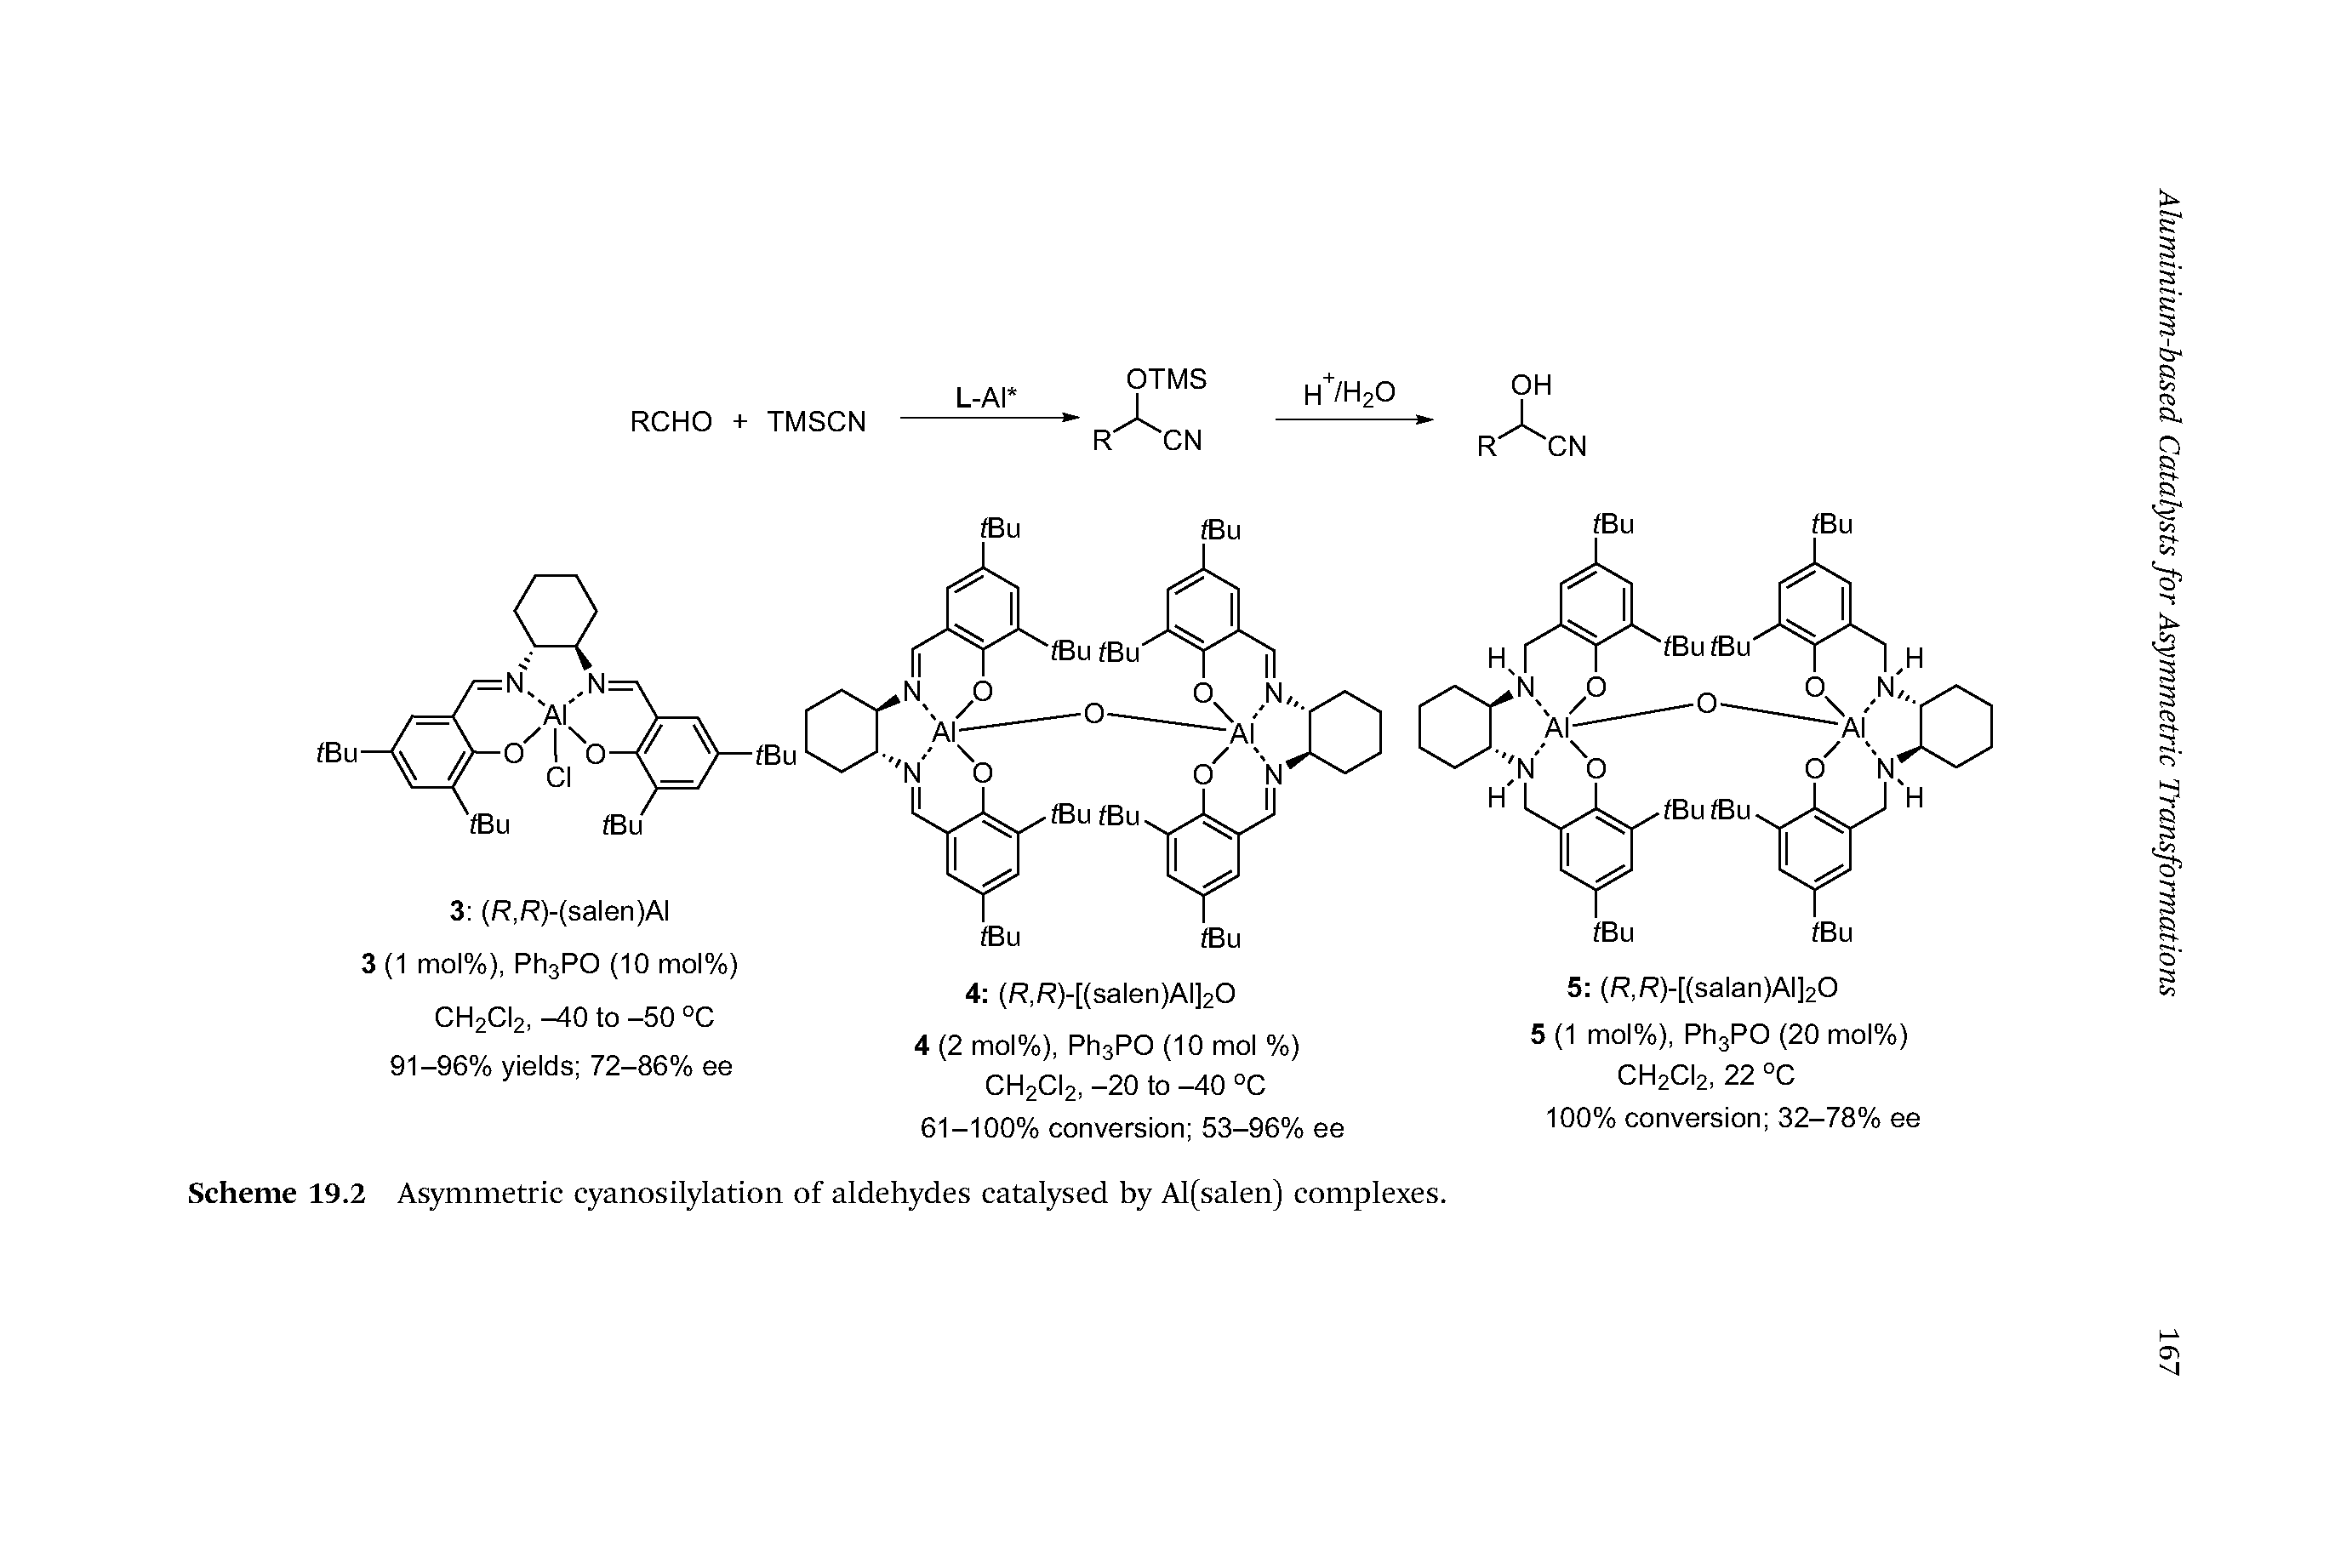 Scheme 19.2 Asymmetric cyanosilylation of aldehydes catalysed by Al(salen) complexes.